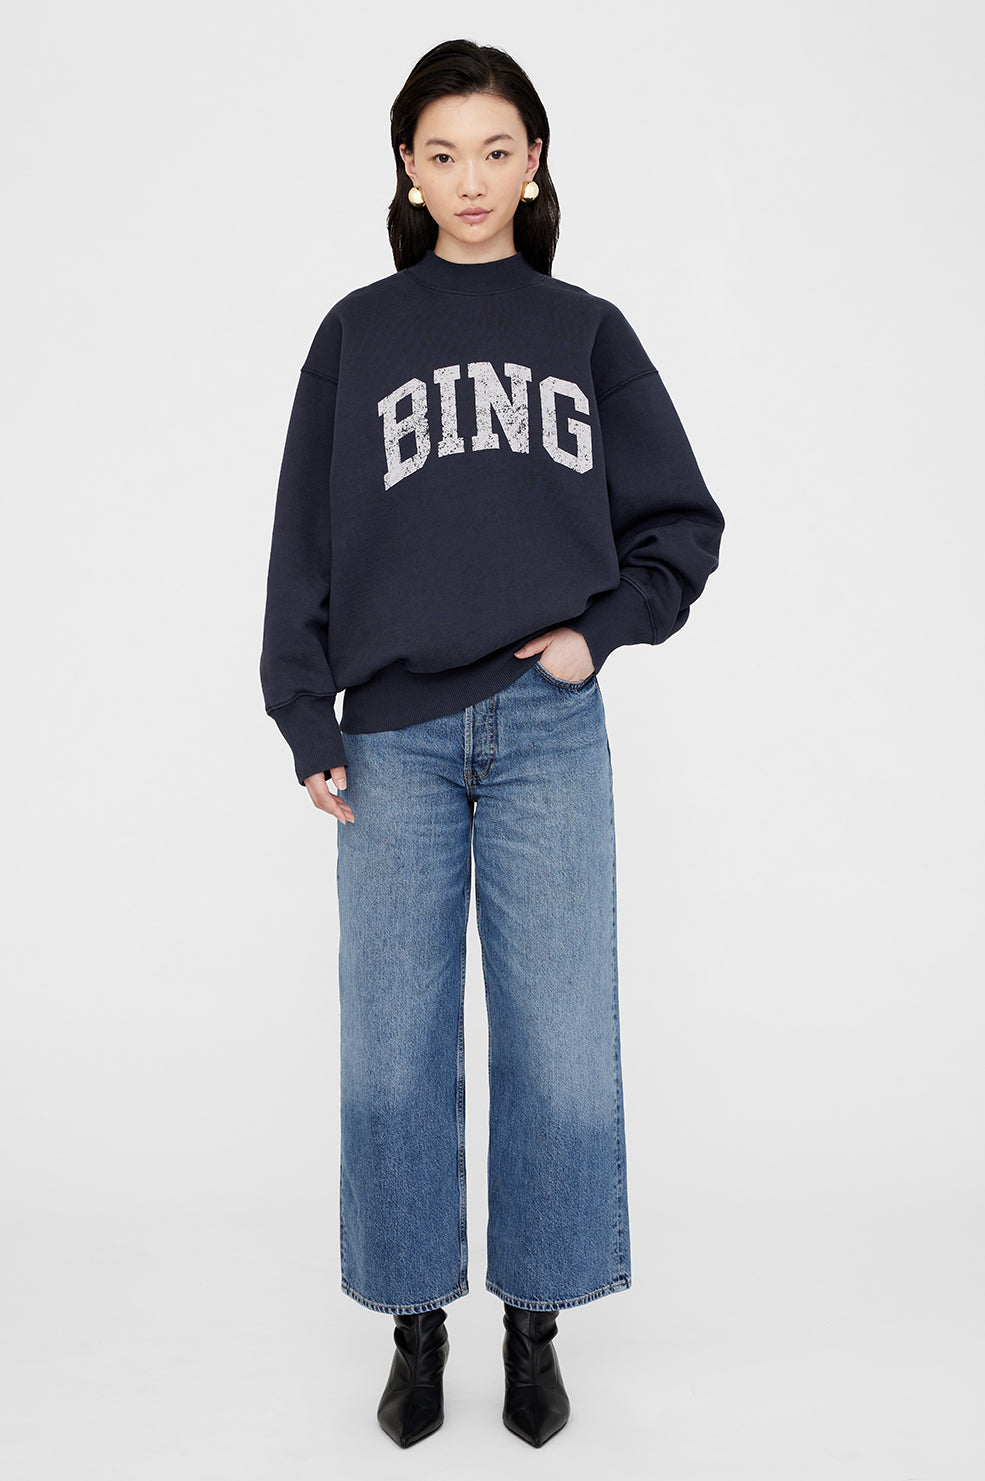 Bradie Sweatshirt Bing  product image